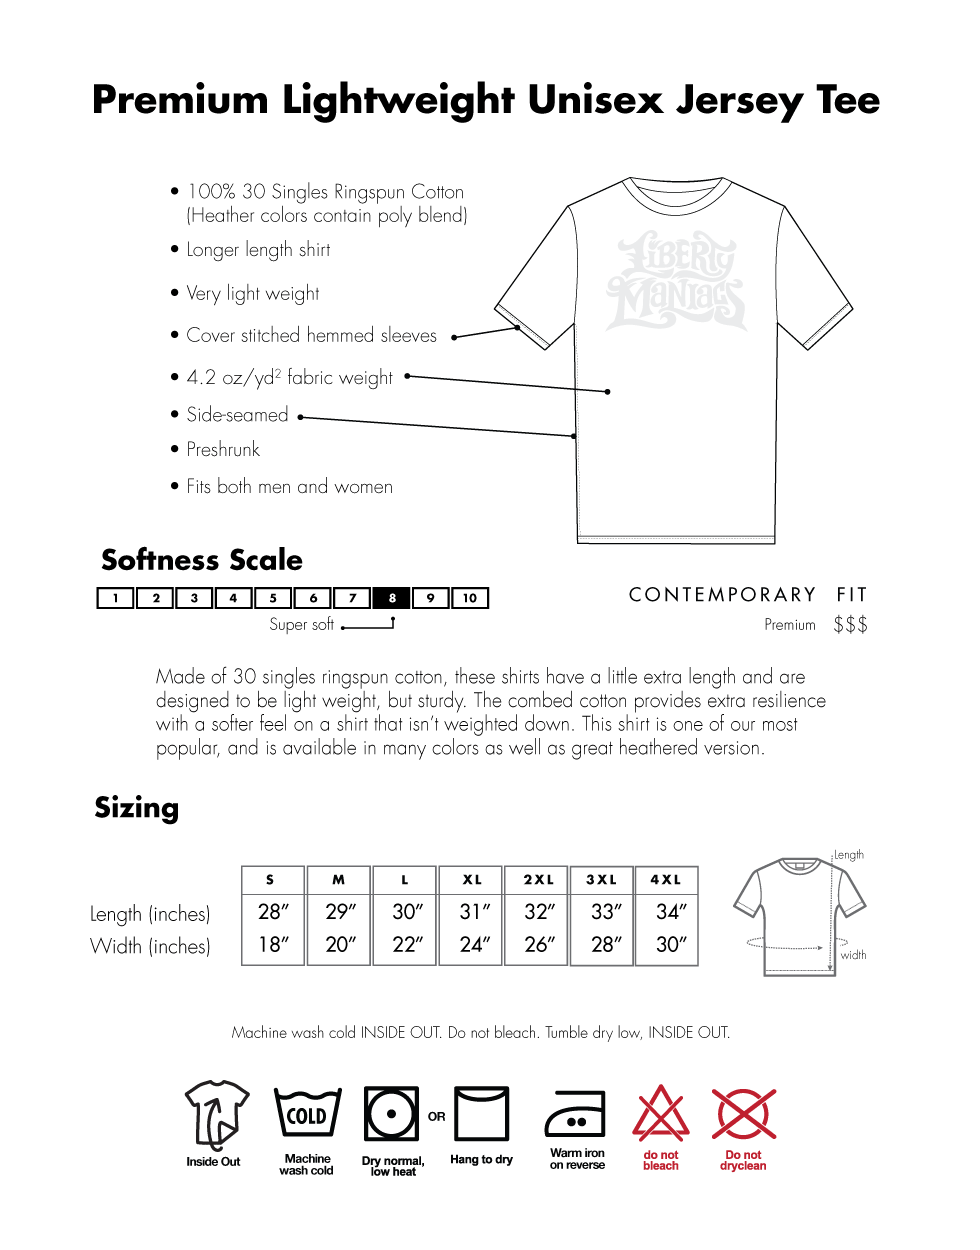 Brawndo The Thirst Mutilator Short-Sleeve Unisex T-Shirt